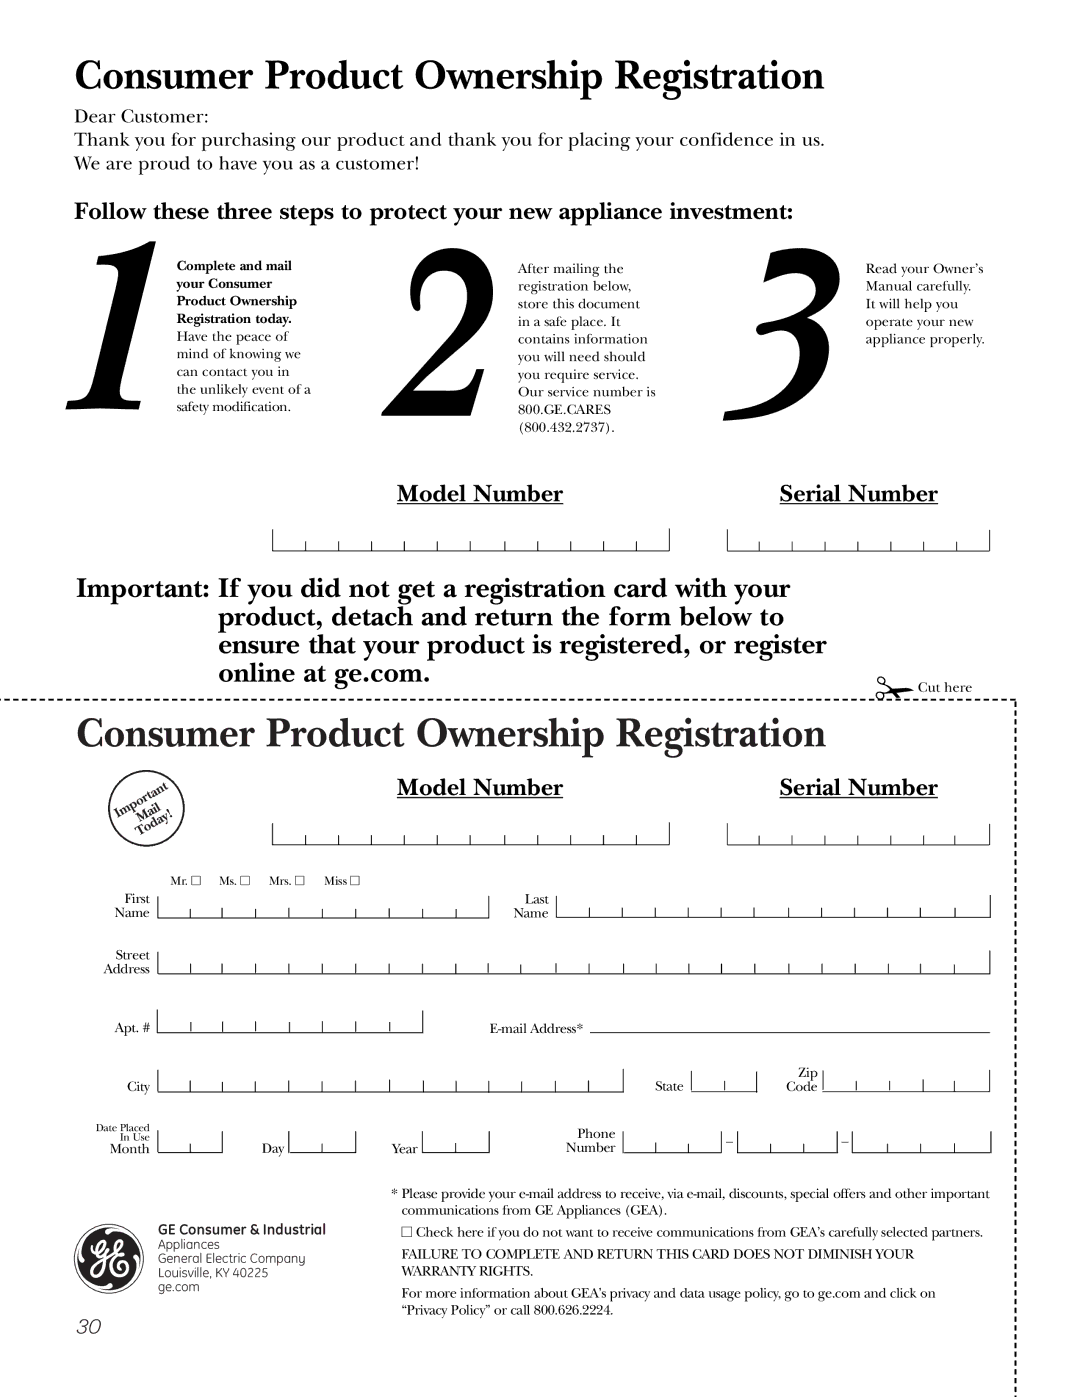 GE PK91627 manual Consumer Product Ownership Registration 